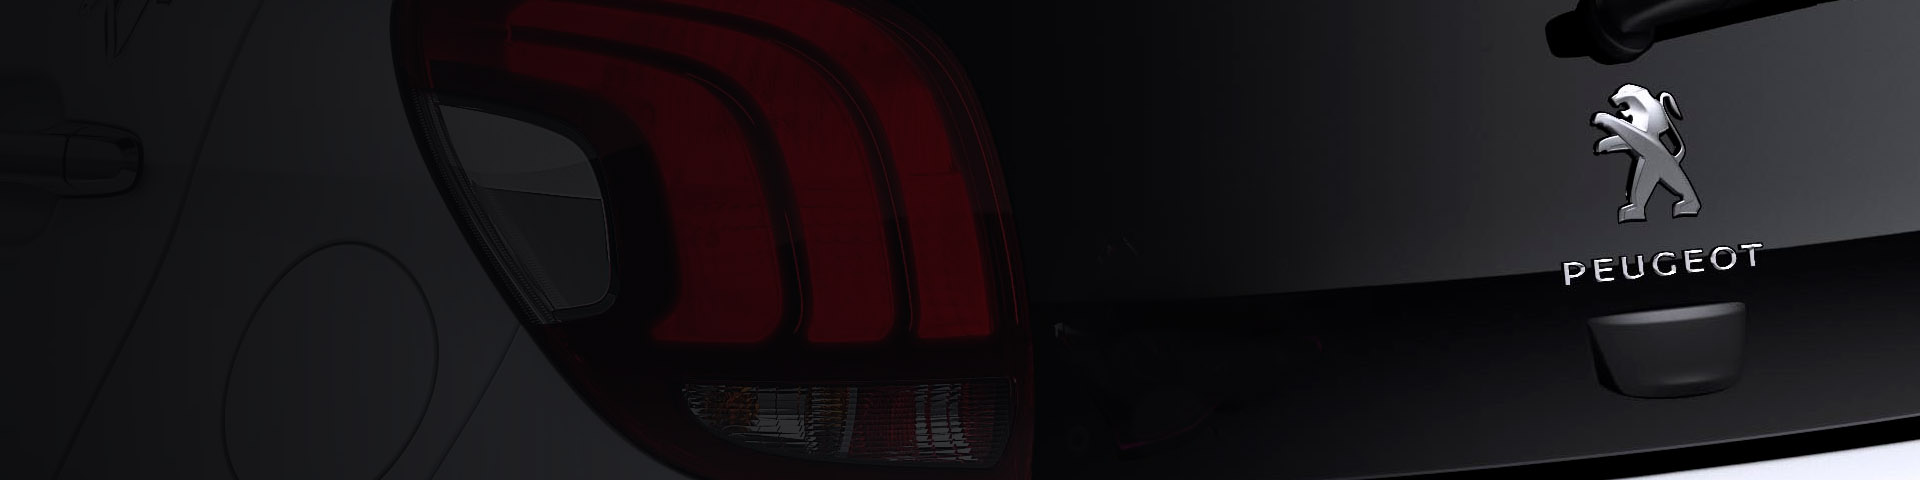 Peugeot 208 Backdrop